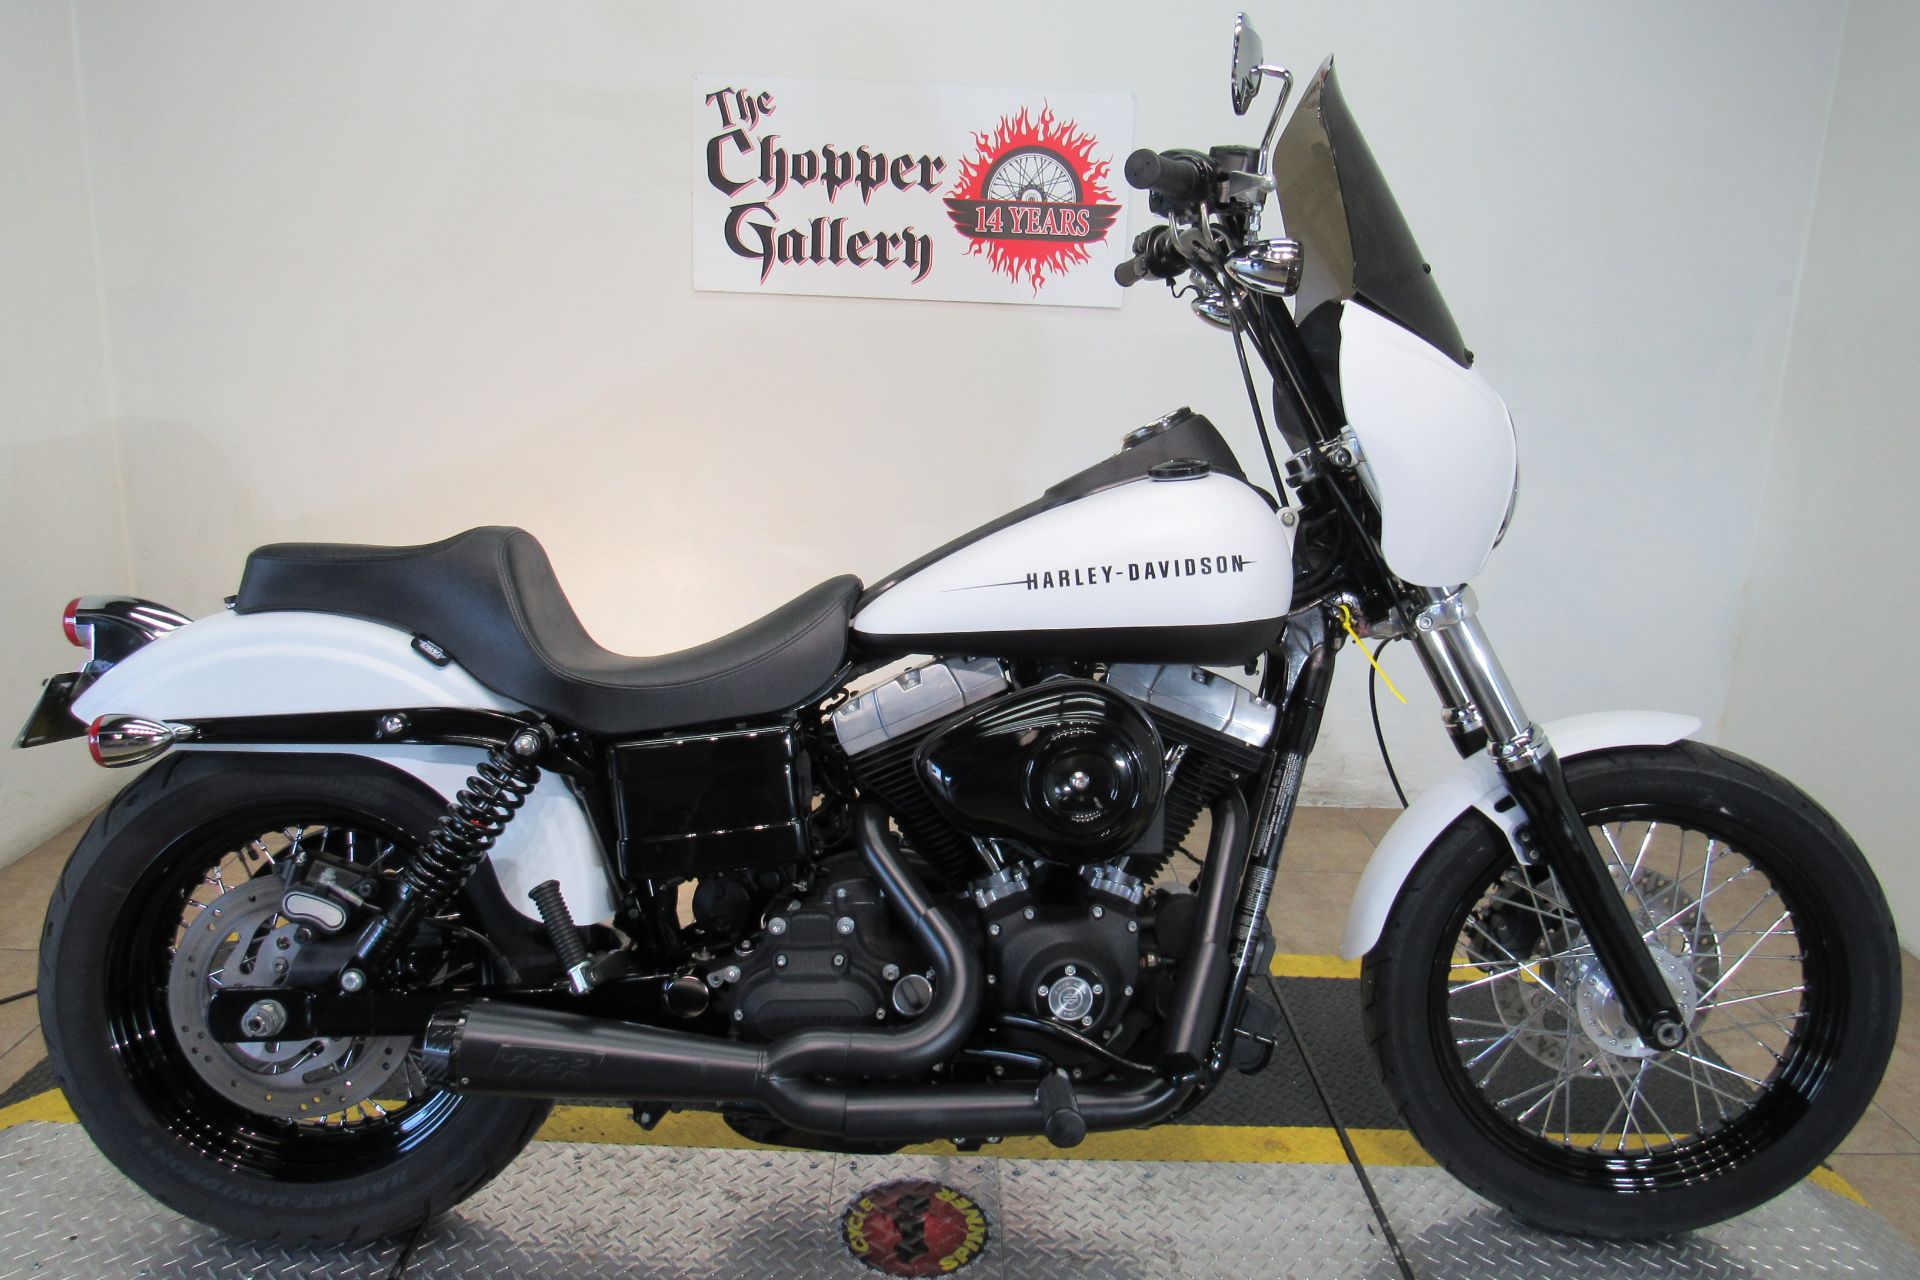 2012 Harley-Davidson Dyna® Street Bob® in Temecula, California - Photo 1